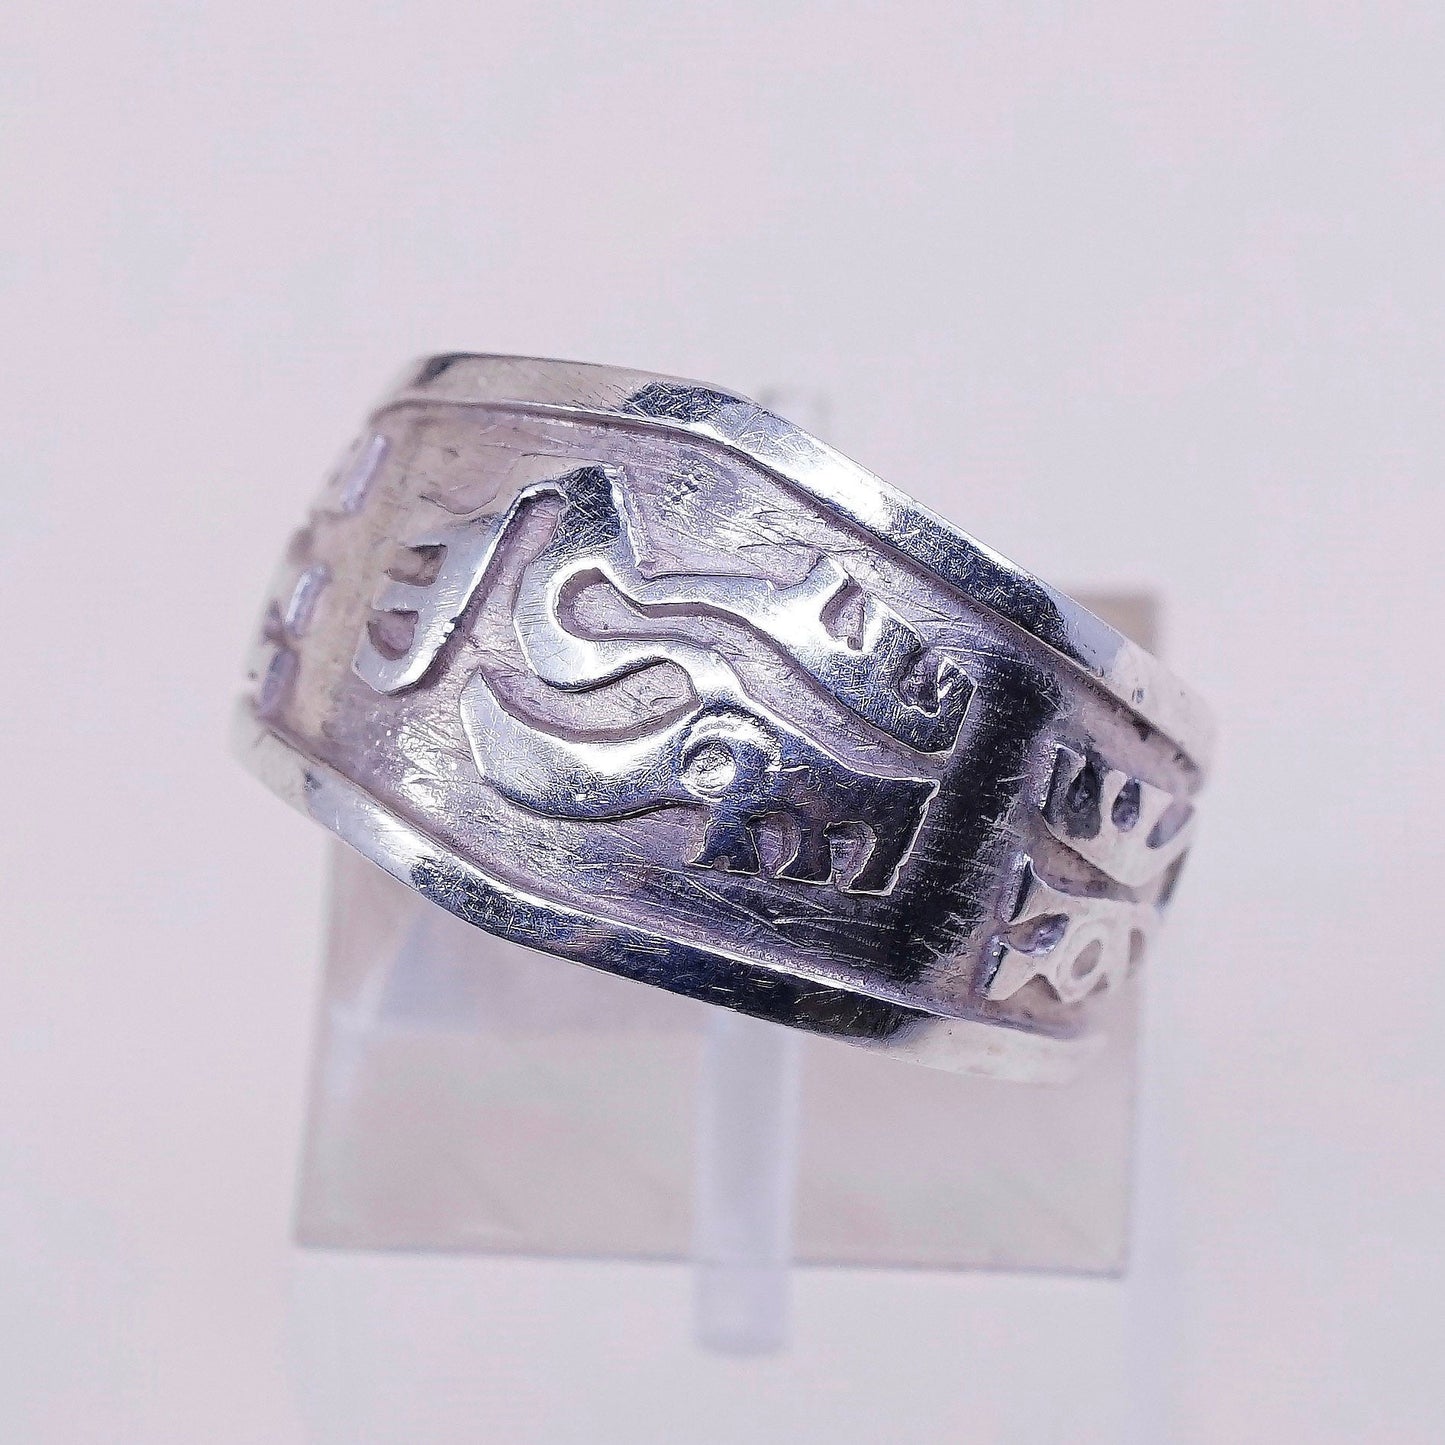 sz 7, vtg Sterling silver handmade ring, 925 band w/ pattern